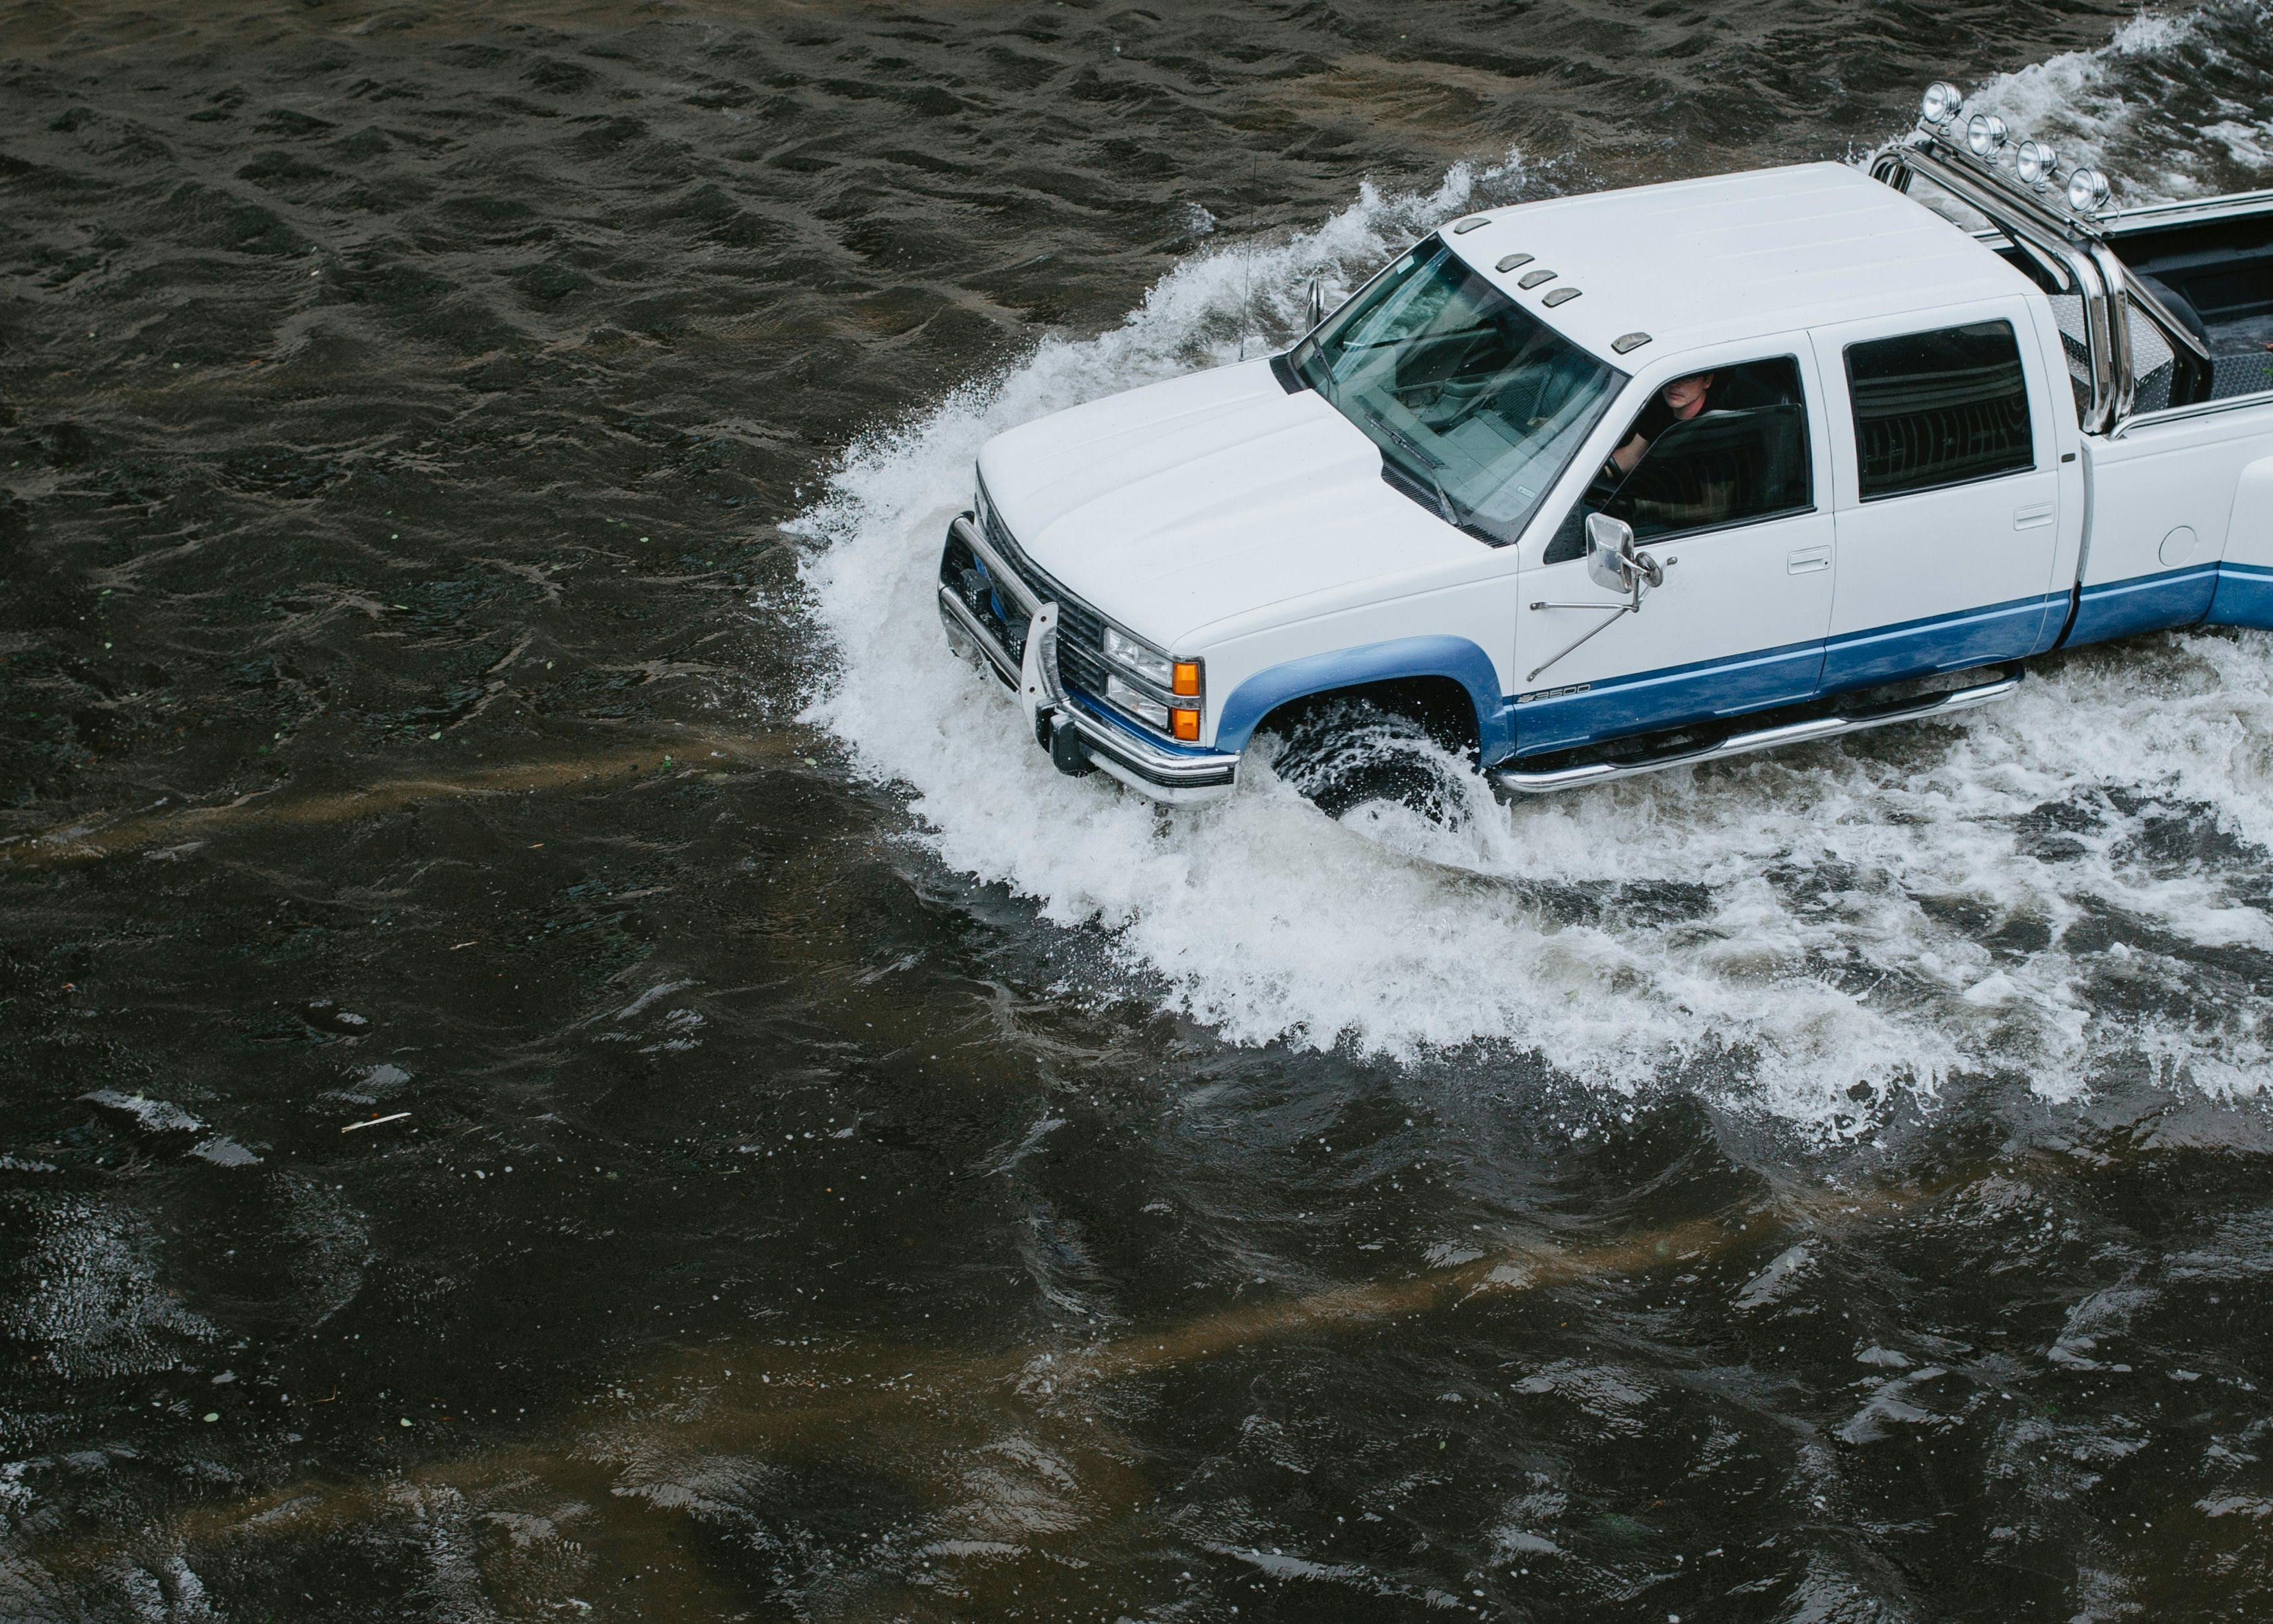 White crew cab truck after Hurricane Irma: ©Wade Austin Ellis - unsplash.com